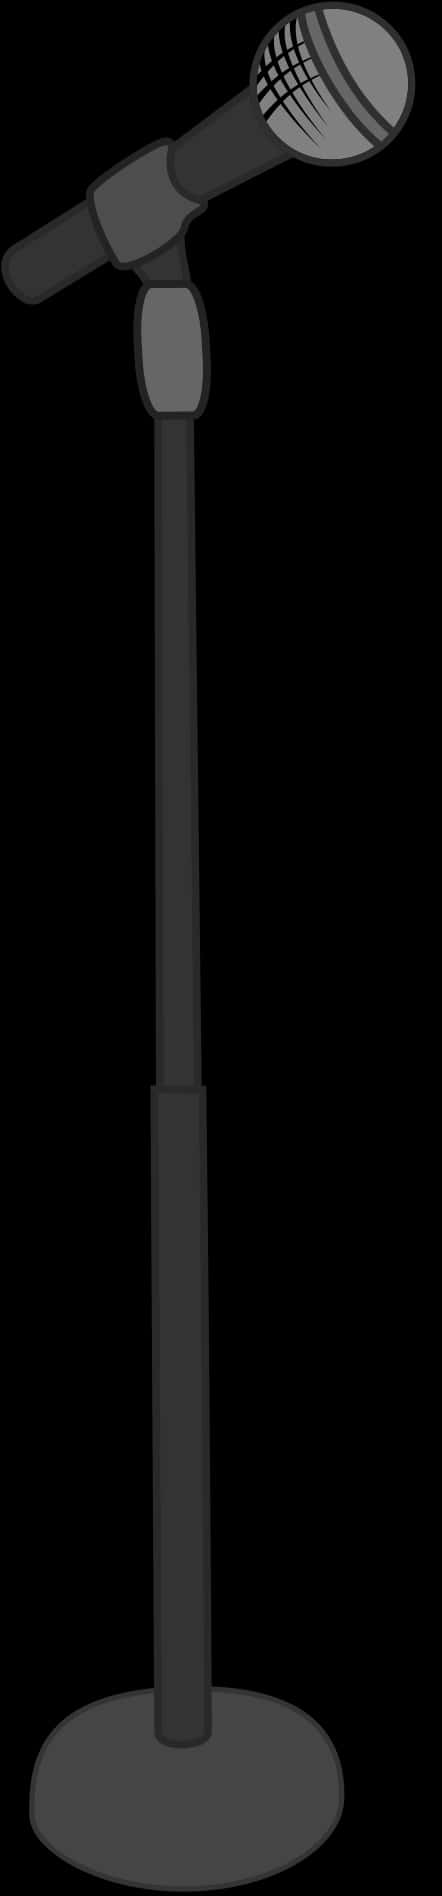 A Black Pole With A Light On It